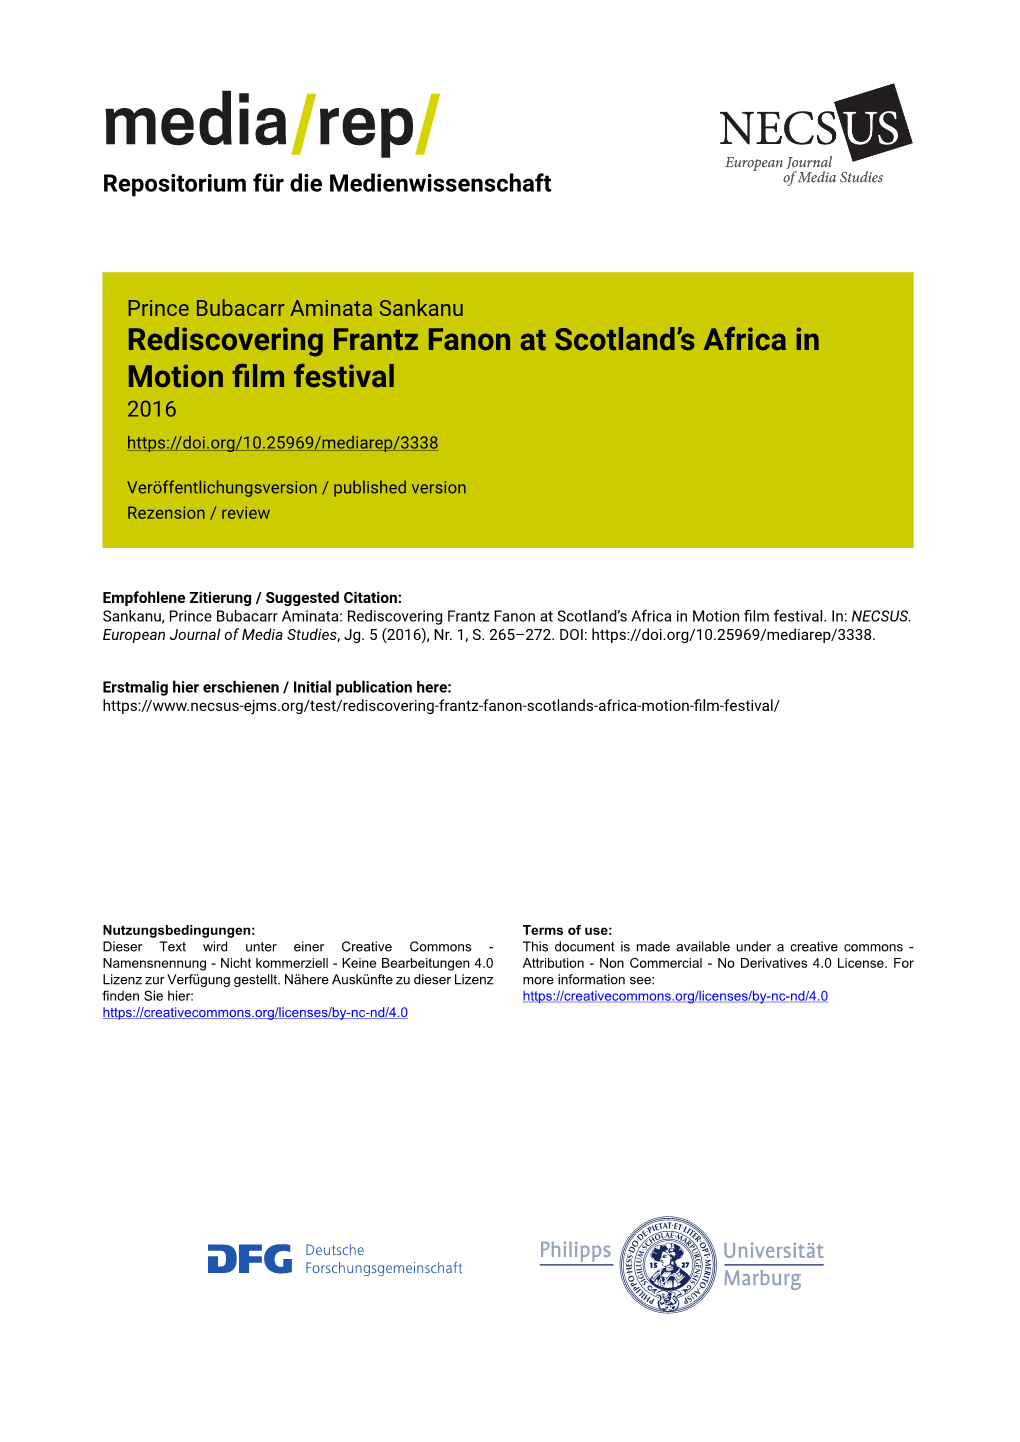 Rediscovering Frantz Fanon at Scotland's Africa in Motion Film Festival